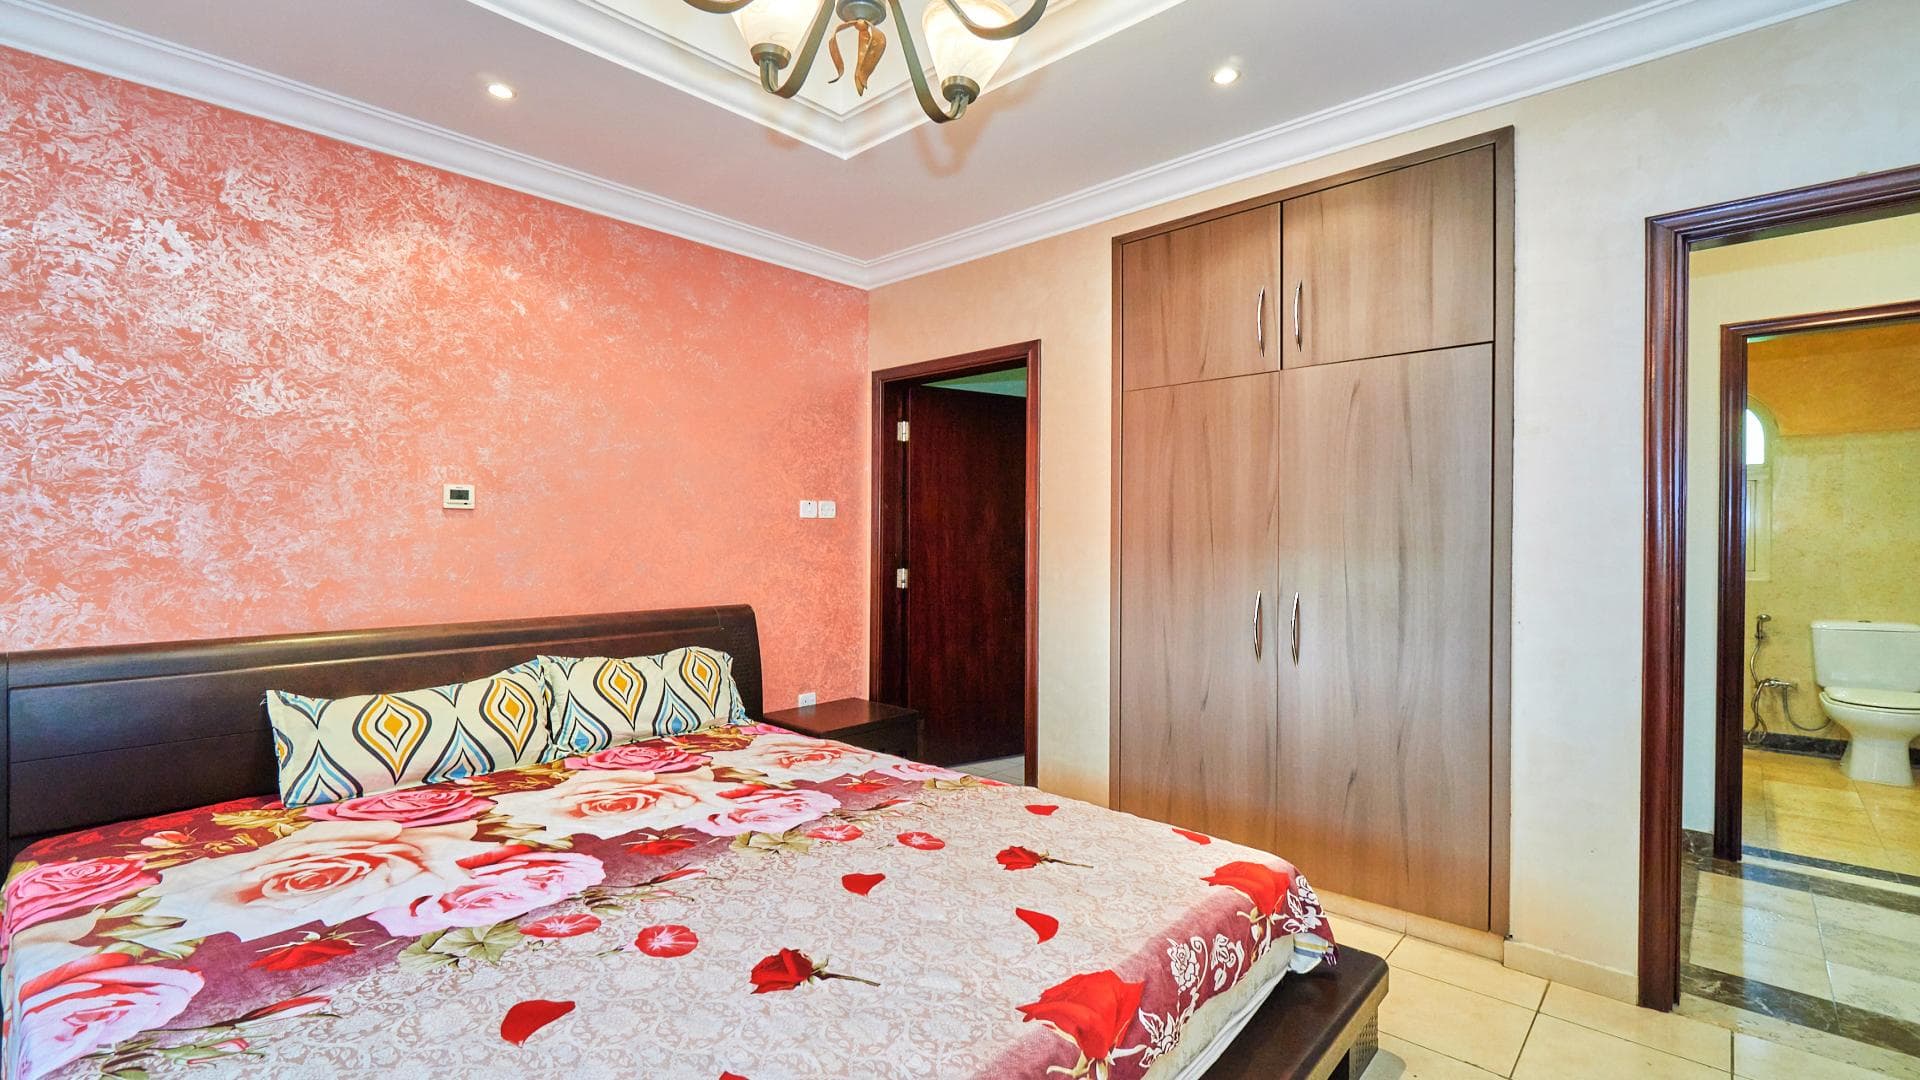 4 Bedroom Villa For Sale Oasis Clusters Lp18485 1253ef1cd90b4100.jpg